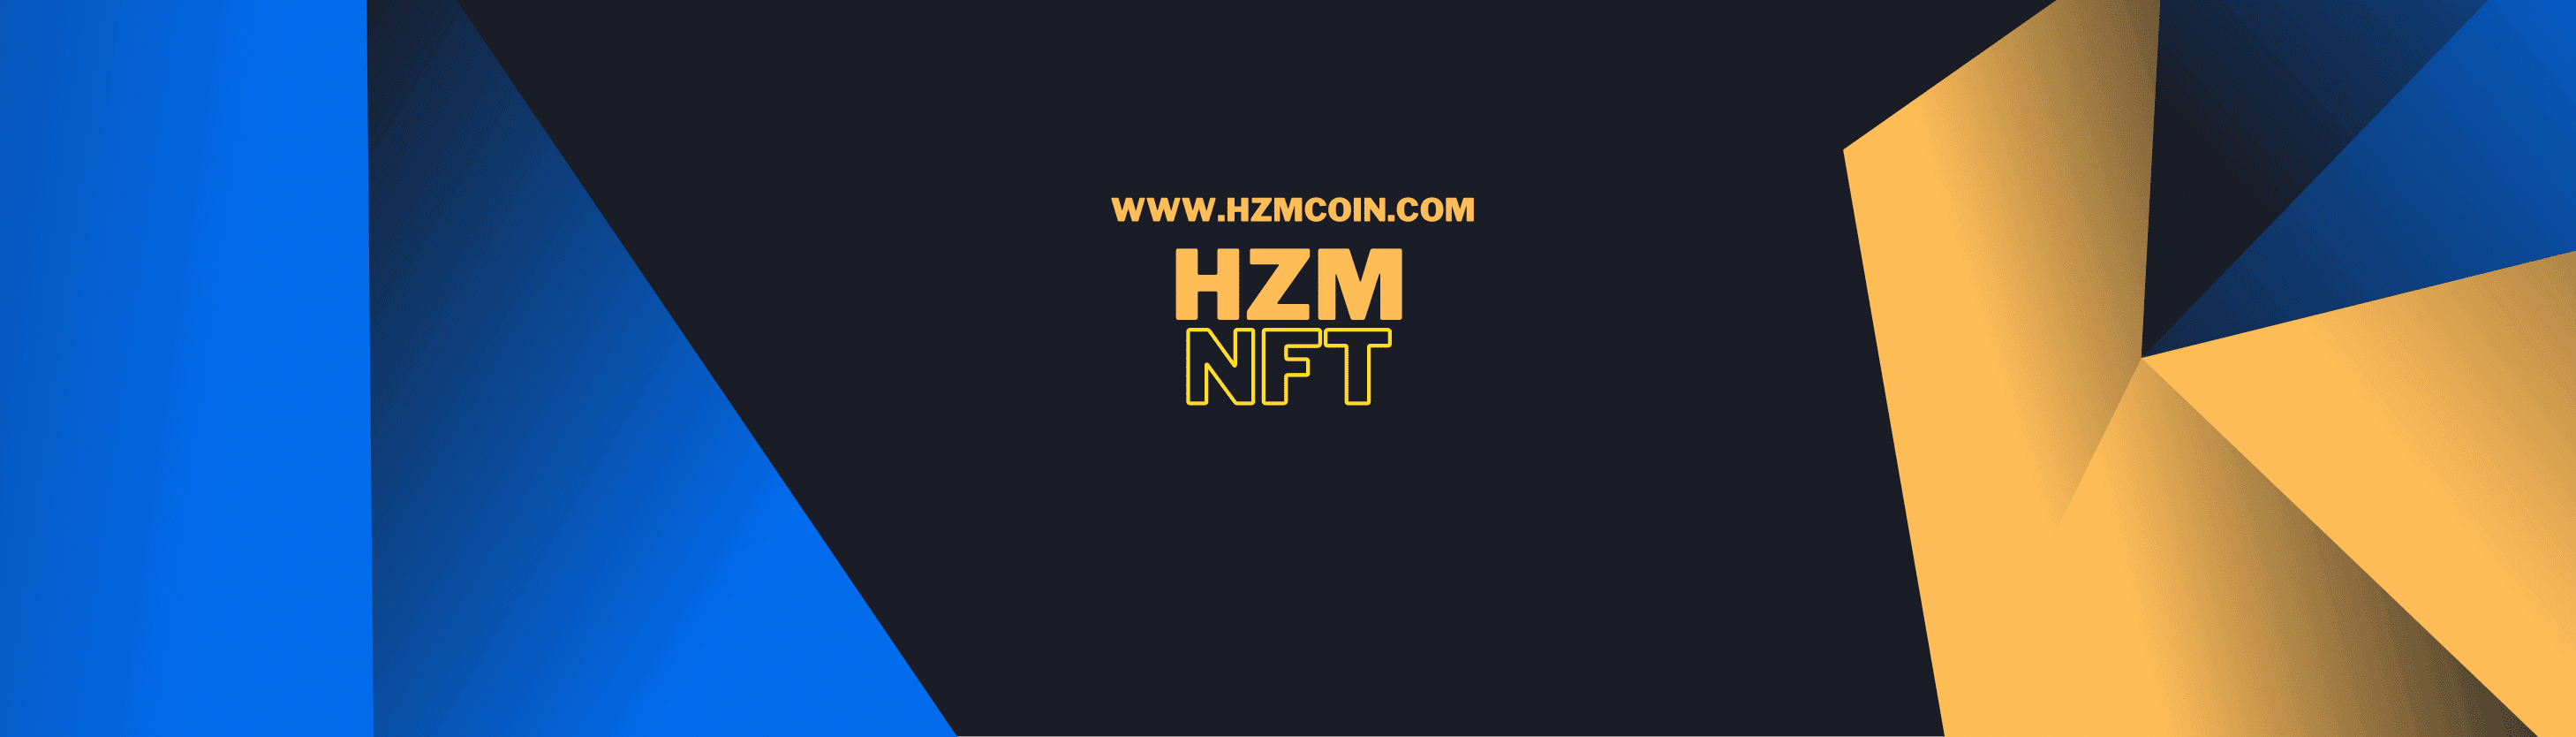 HZM_NFT 橫幅